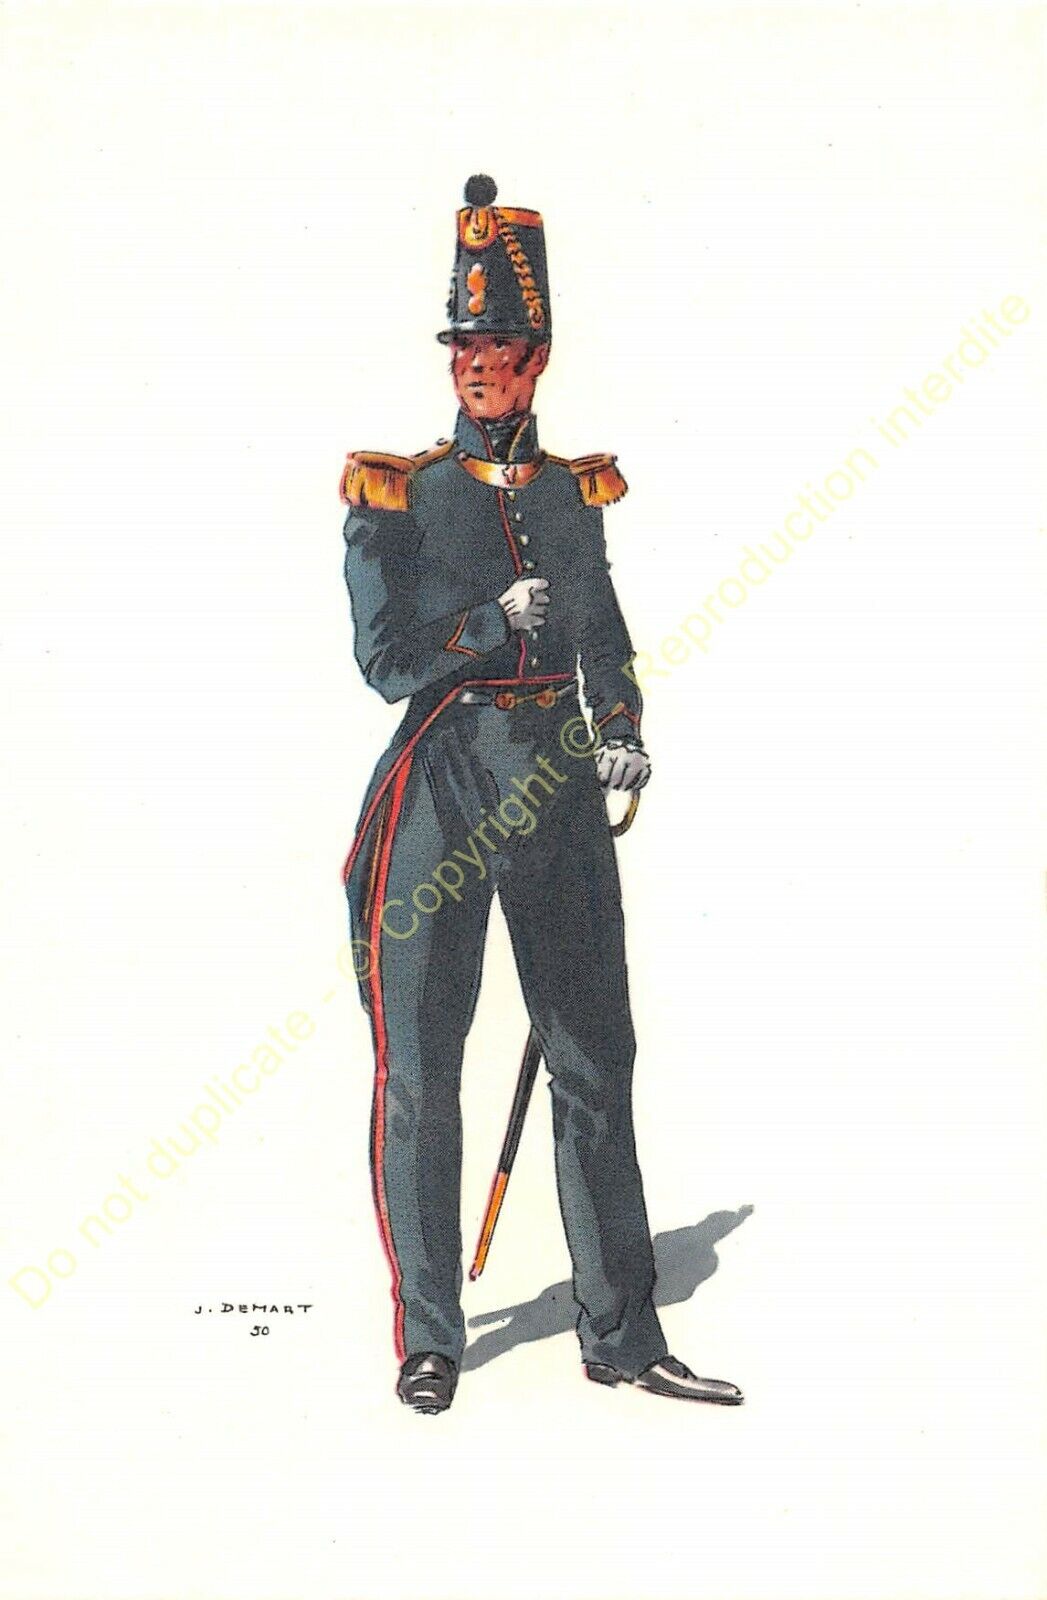 Illustration J.Demart Militaria Belgium Engineering Officer 1830